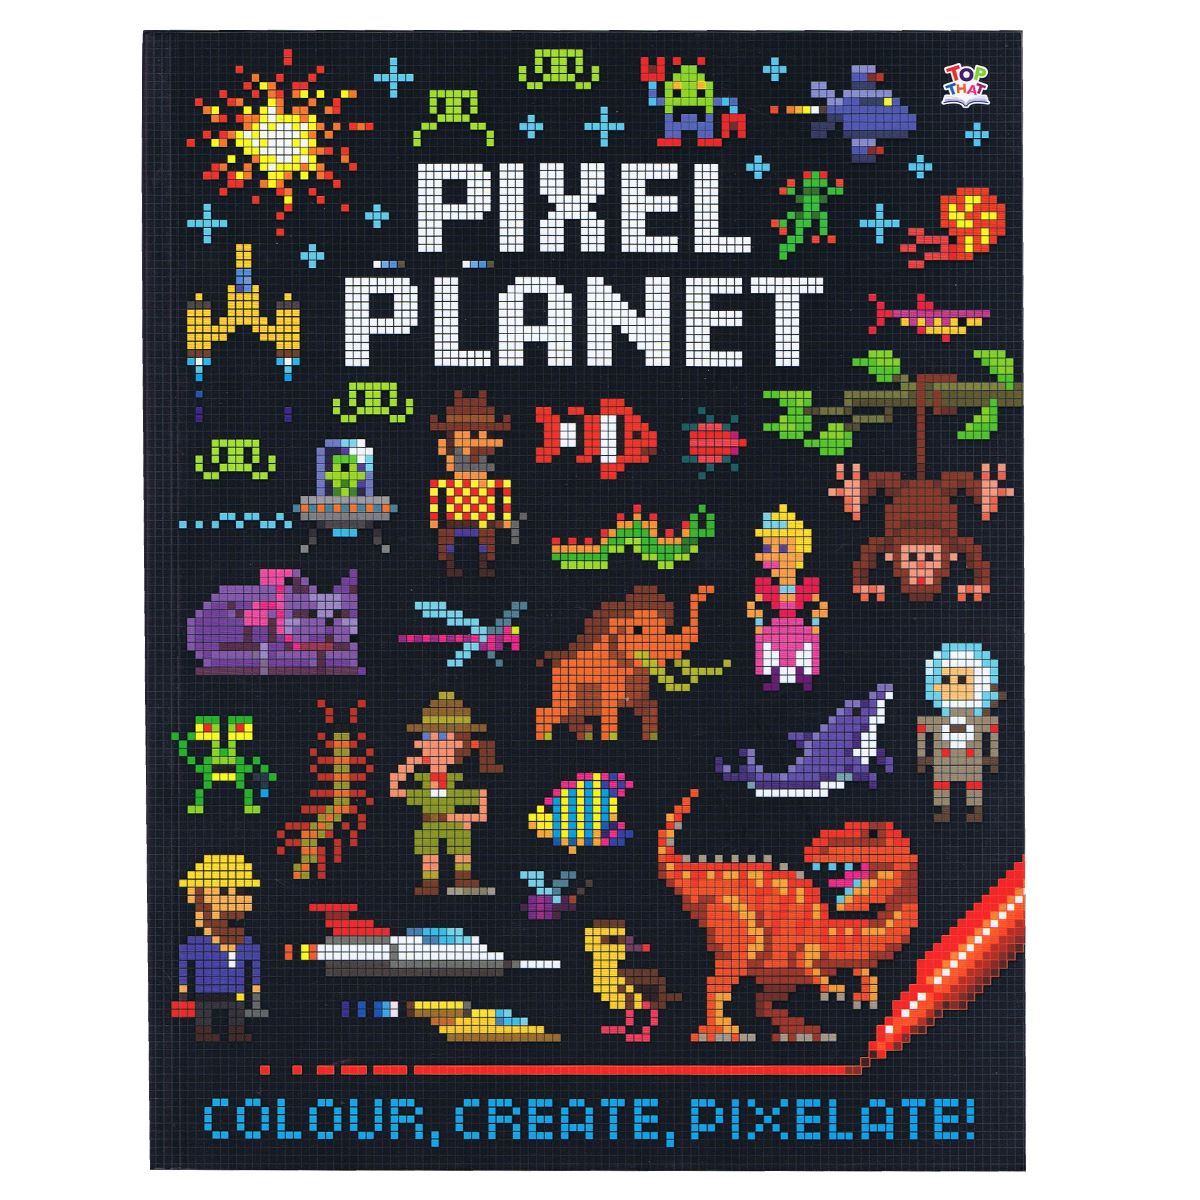 Top That Pixel Pix Pixel Planet Colouring Book